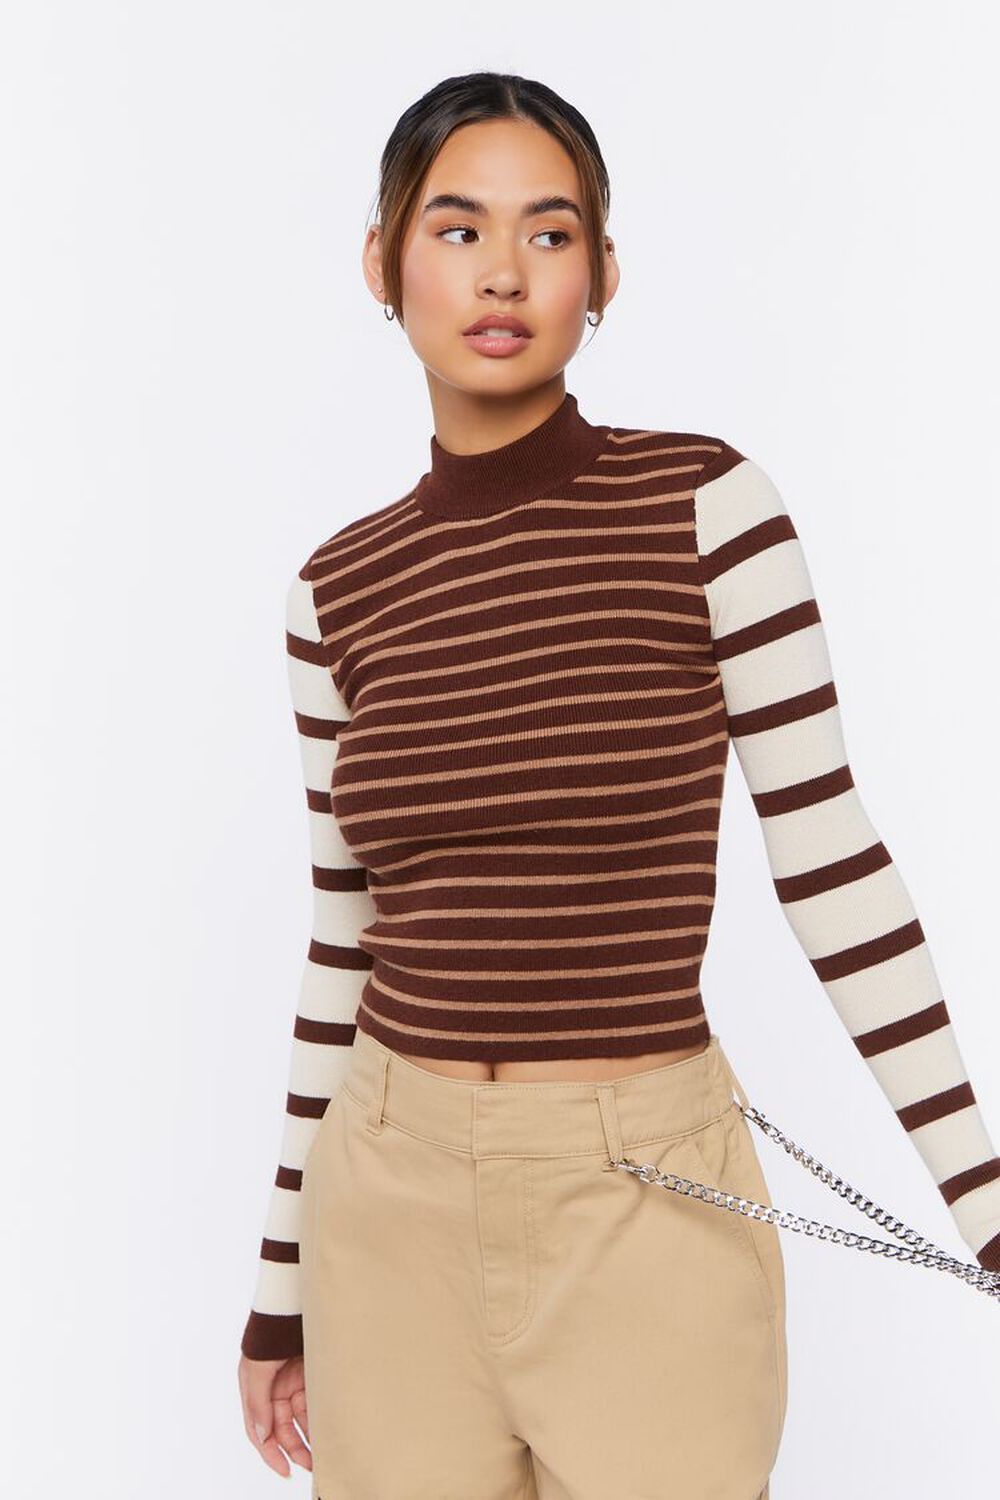 TOAST/MULTI Mock Neck Striped Sweater, image 1